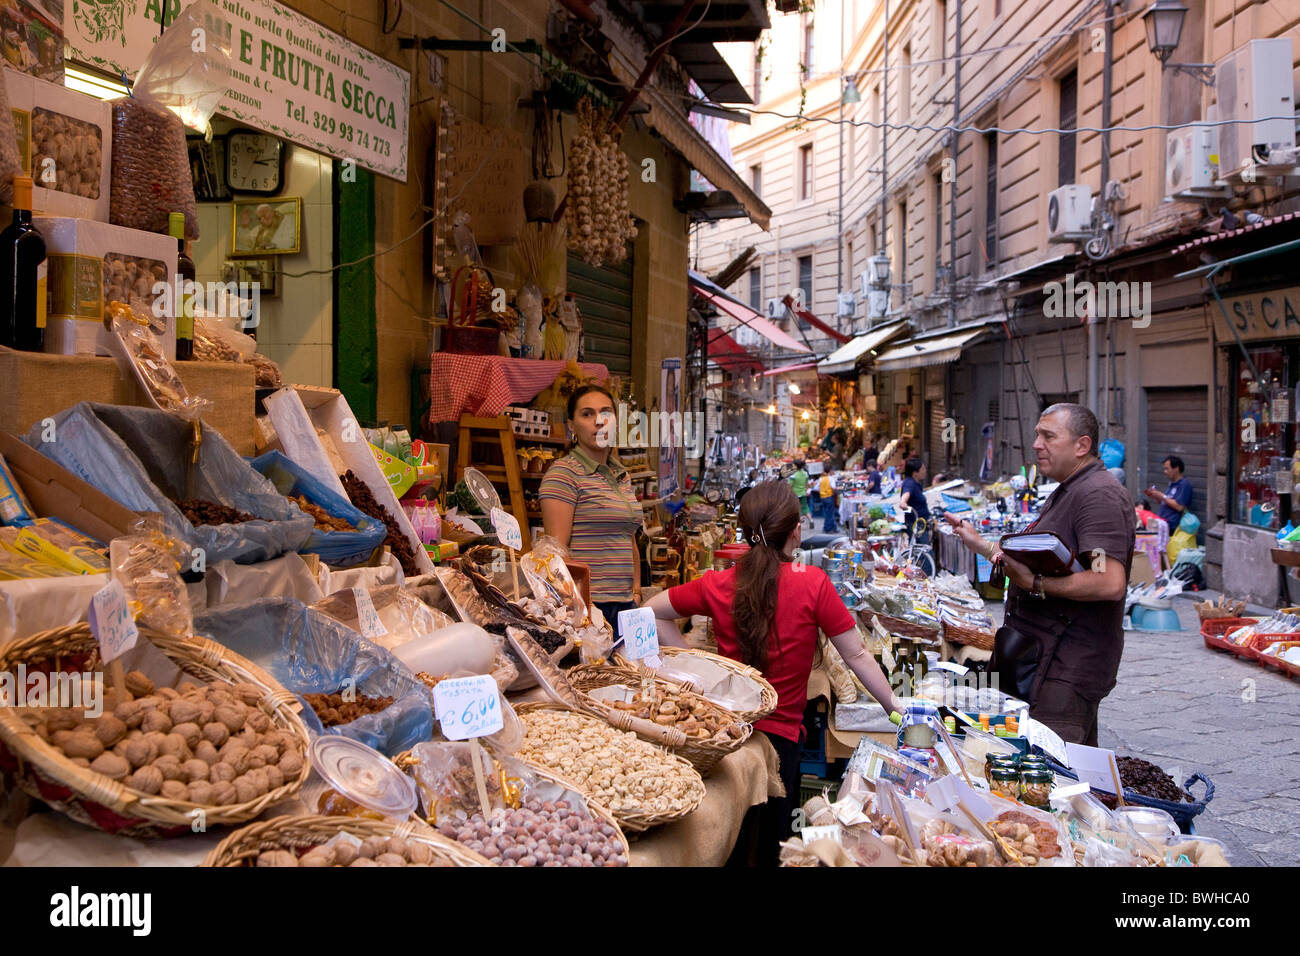 Mercato di Capo, market for food and textiles, Palermo, Sicily, Italy, Europe Stock Photo